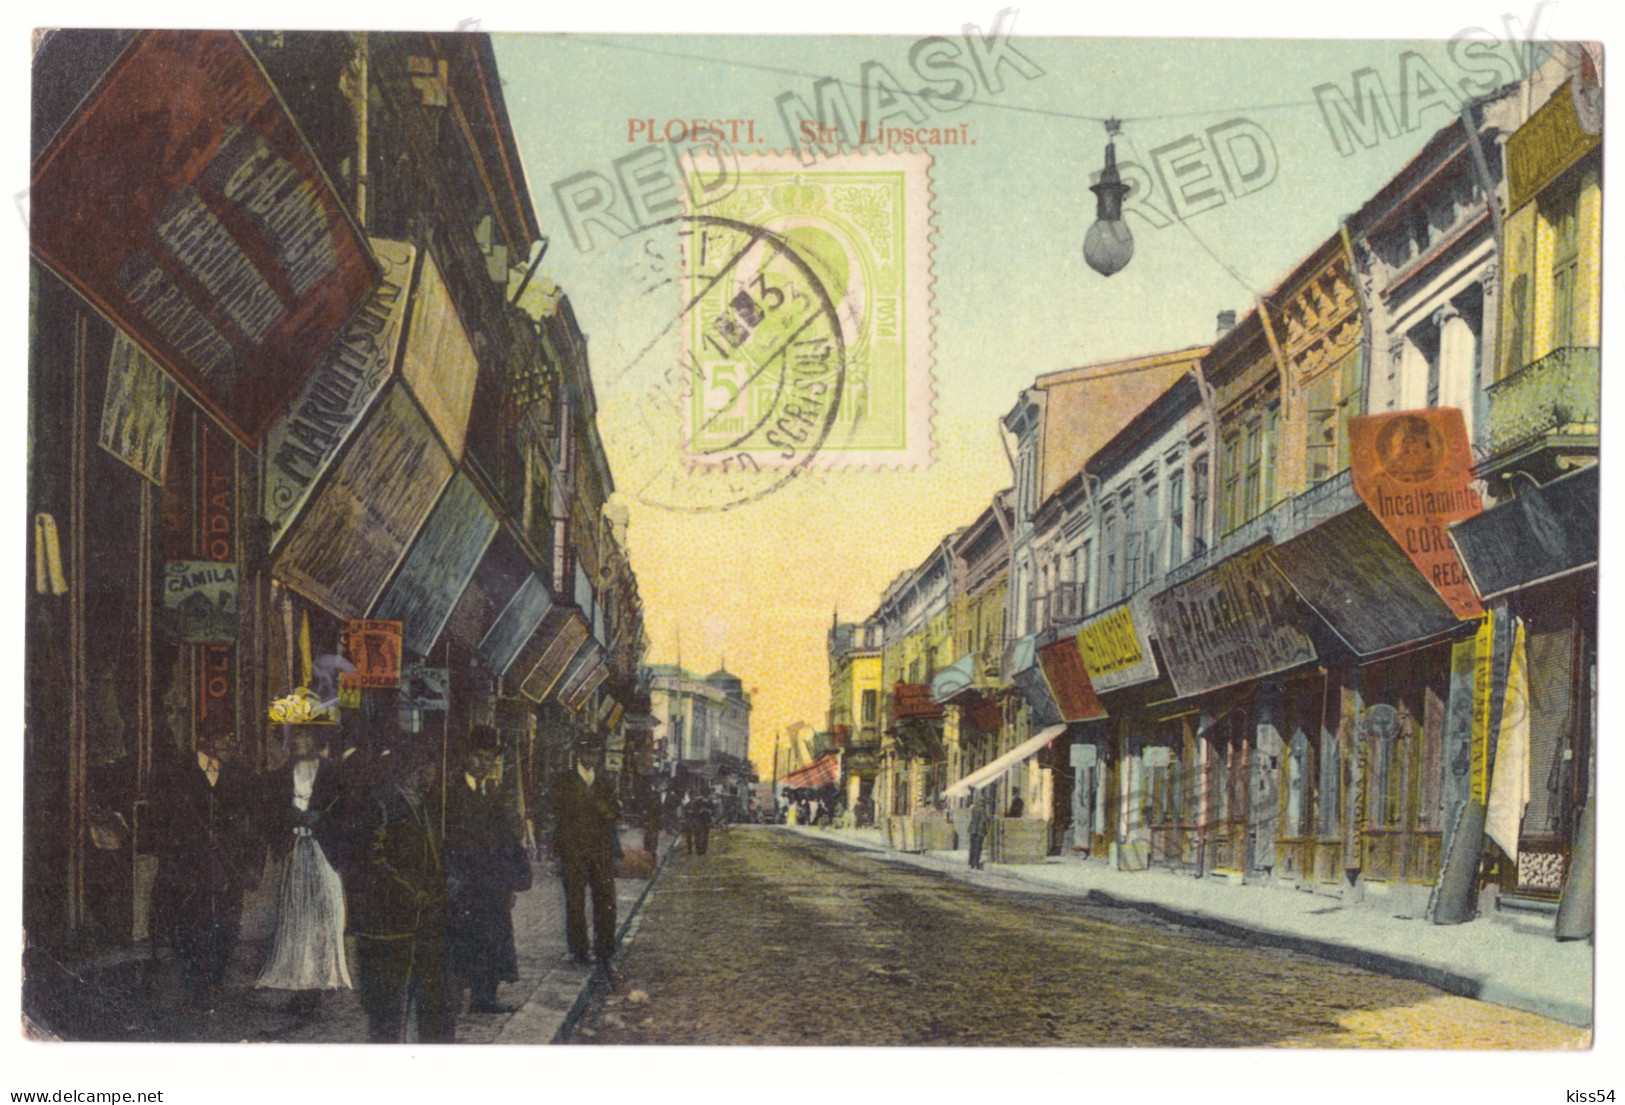 RO 69 - 21056 PLOIESTI, Street Stores, Romania - Old Postcard - Used - TCV - 1923 - Rumänien